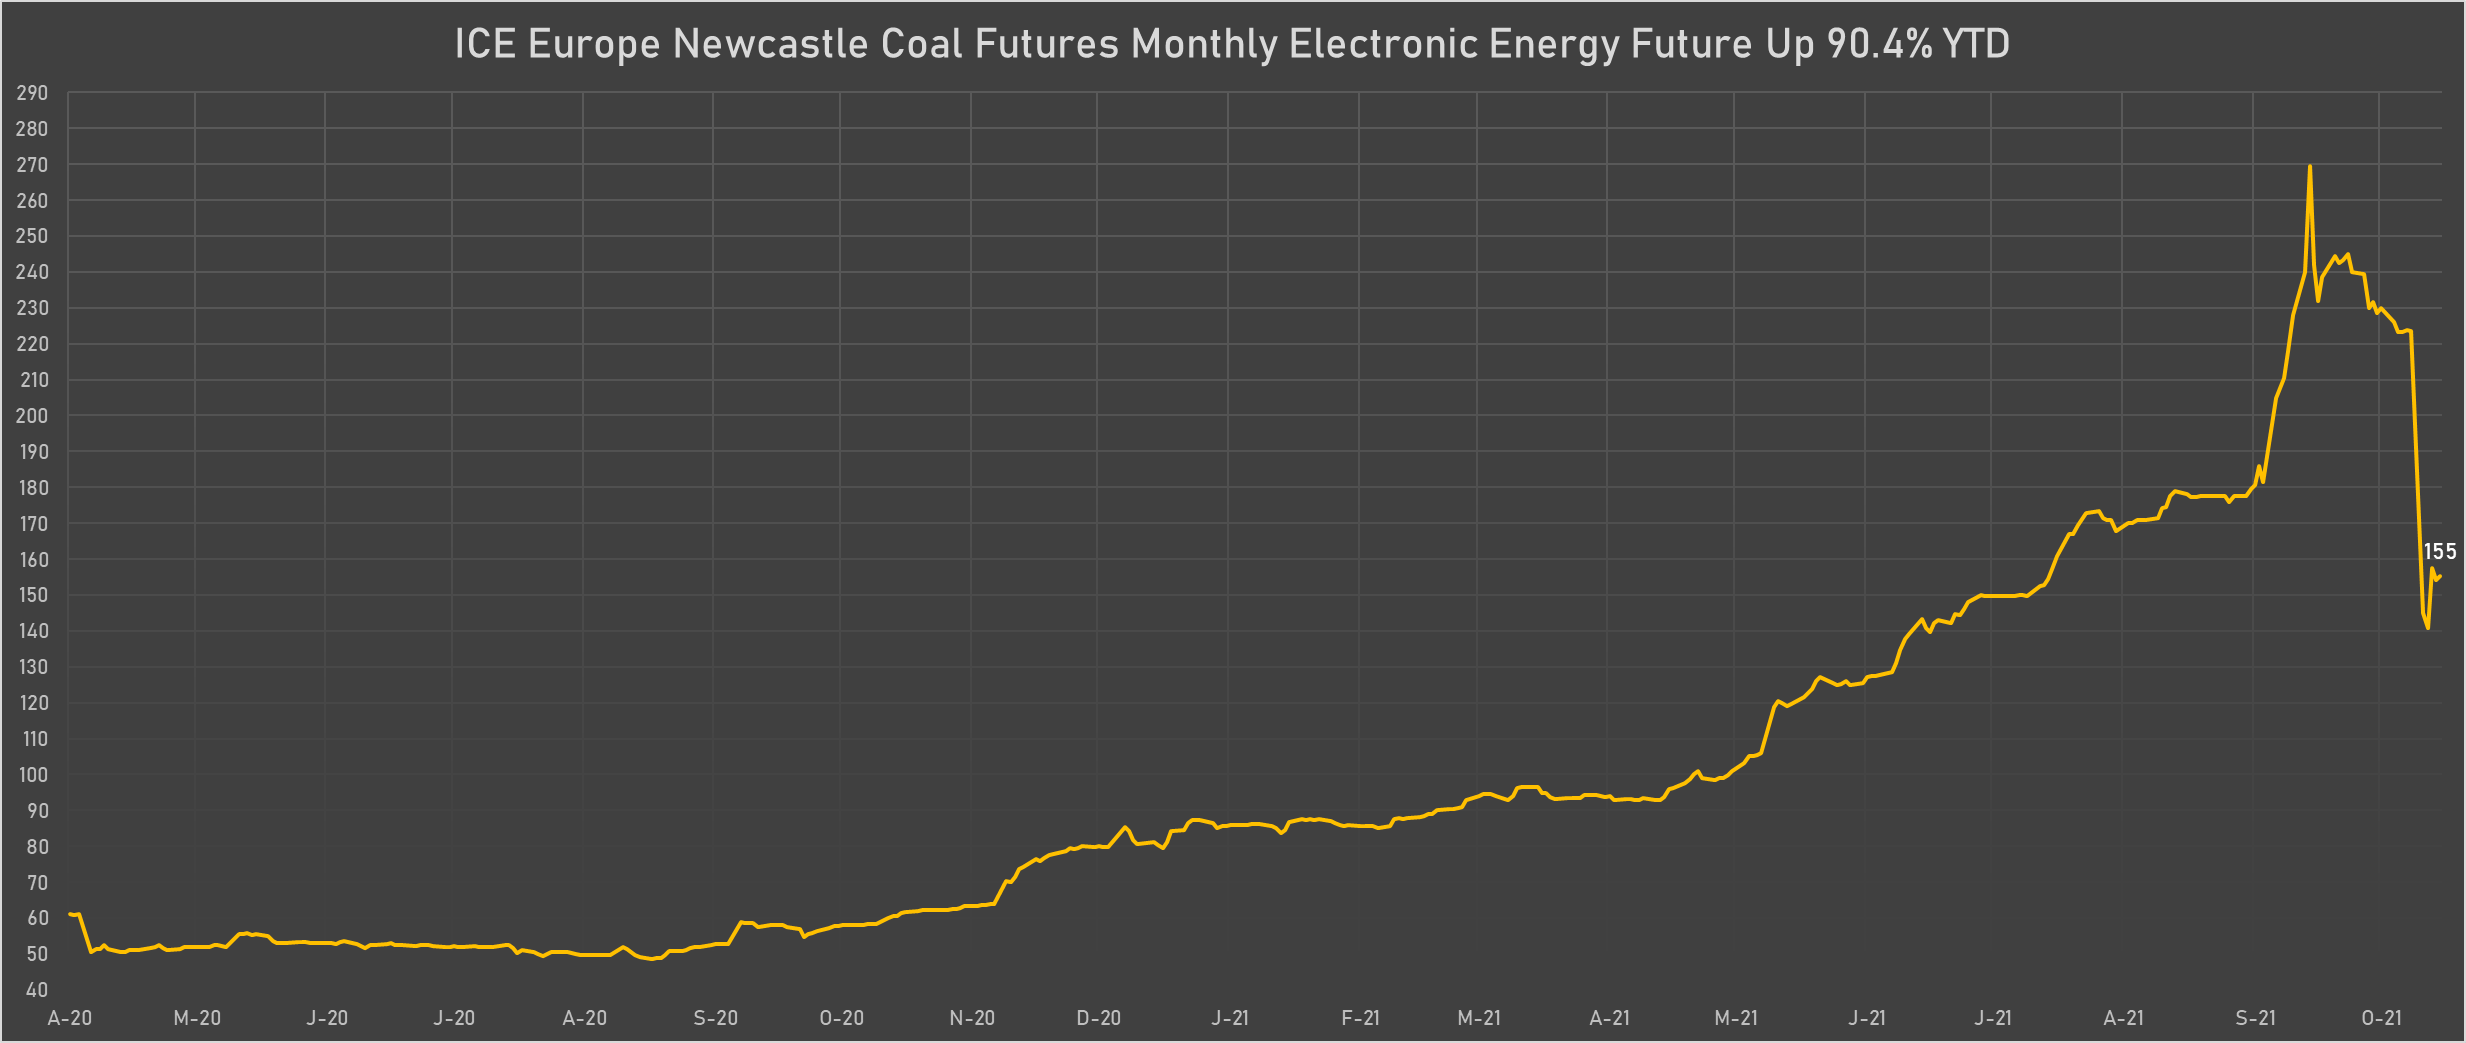 Newcastle Coal Front-Month Future | Sources: phipost.com, Refinitiv data